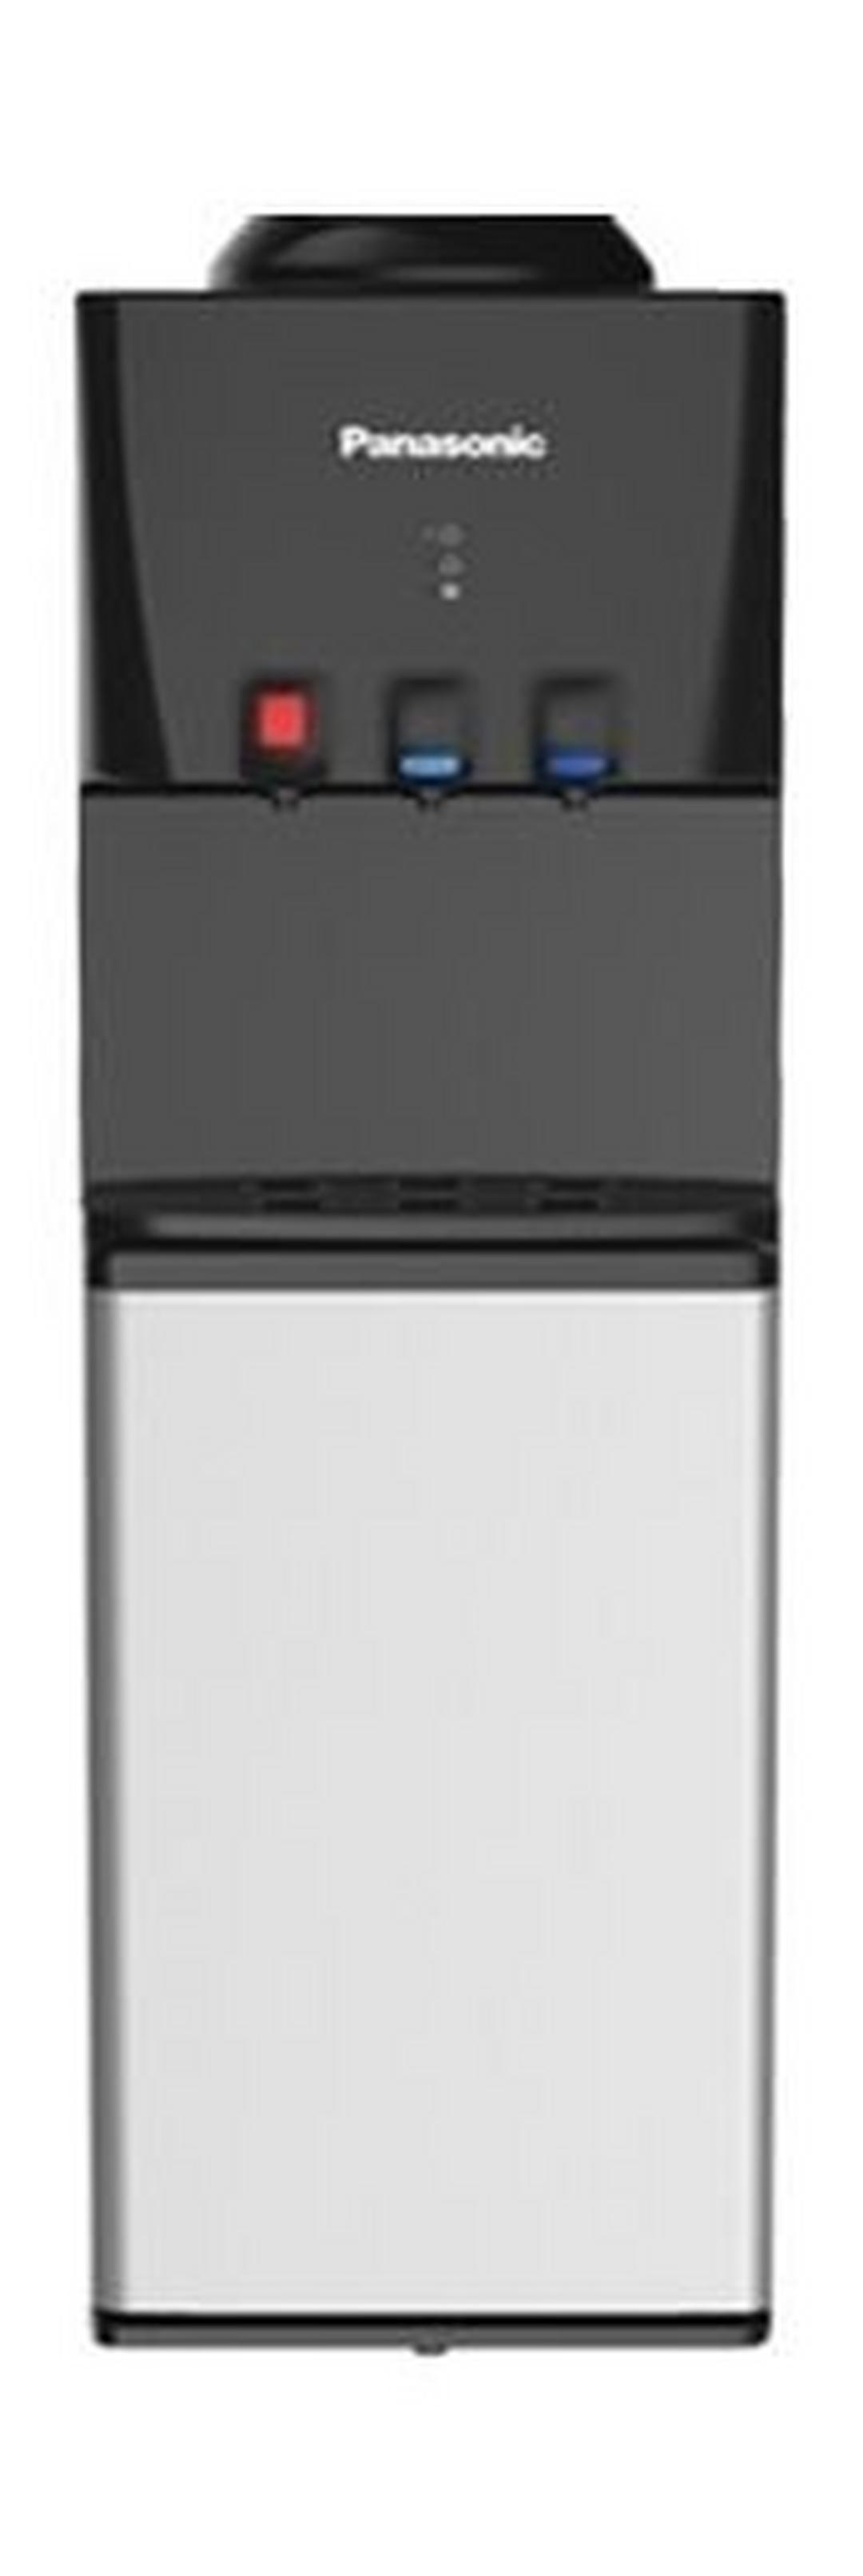 Panasonic Top Load Floor Standing Water Dispenser - White/Silver